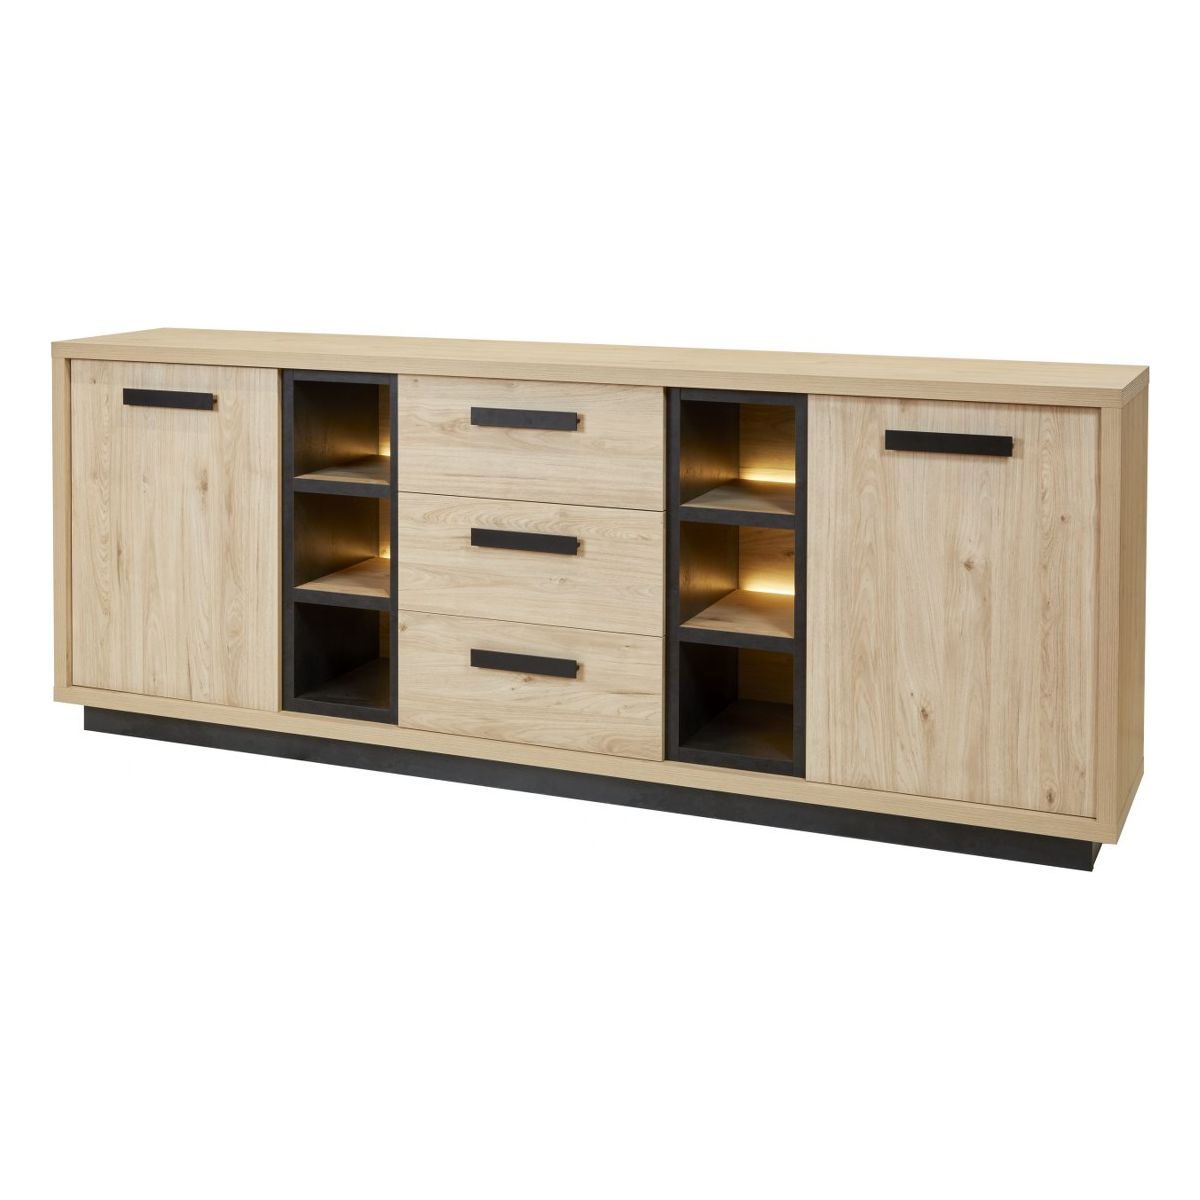 Dresser | Furniture series Tilly | brown, natural, black | 240x